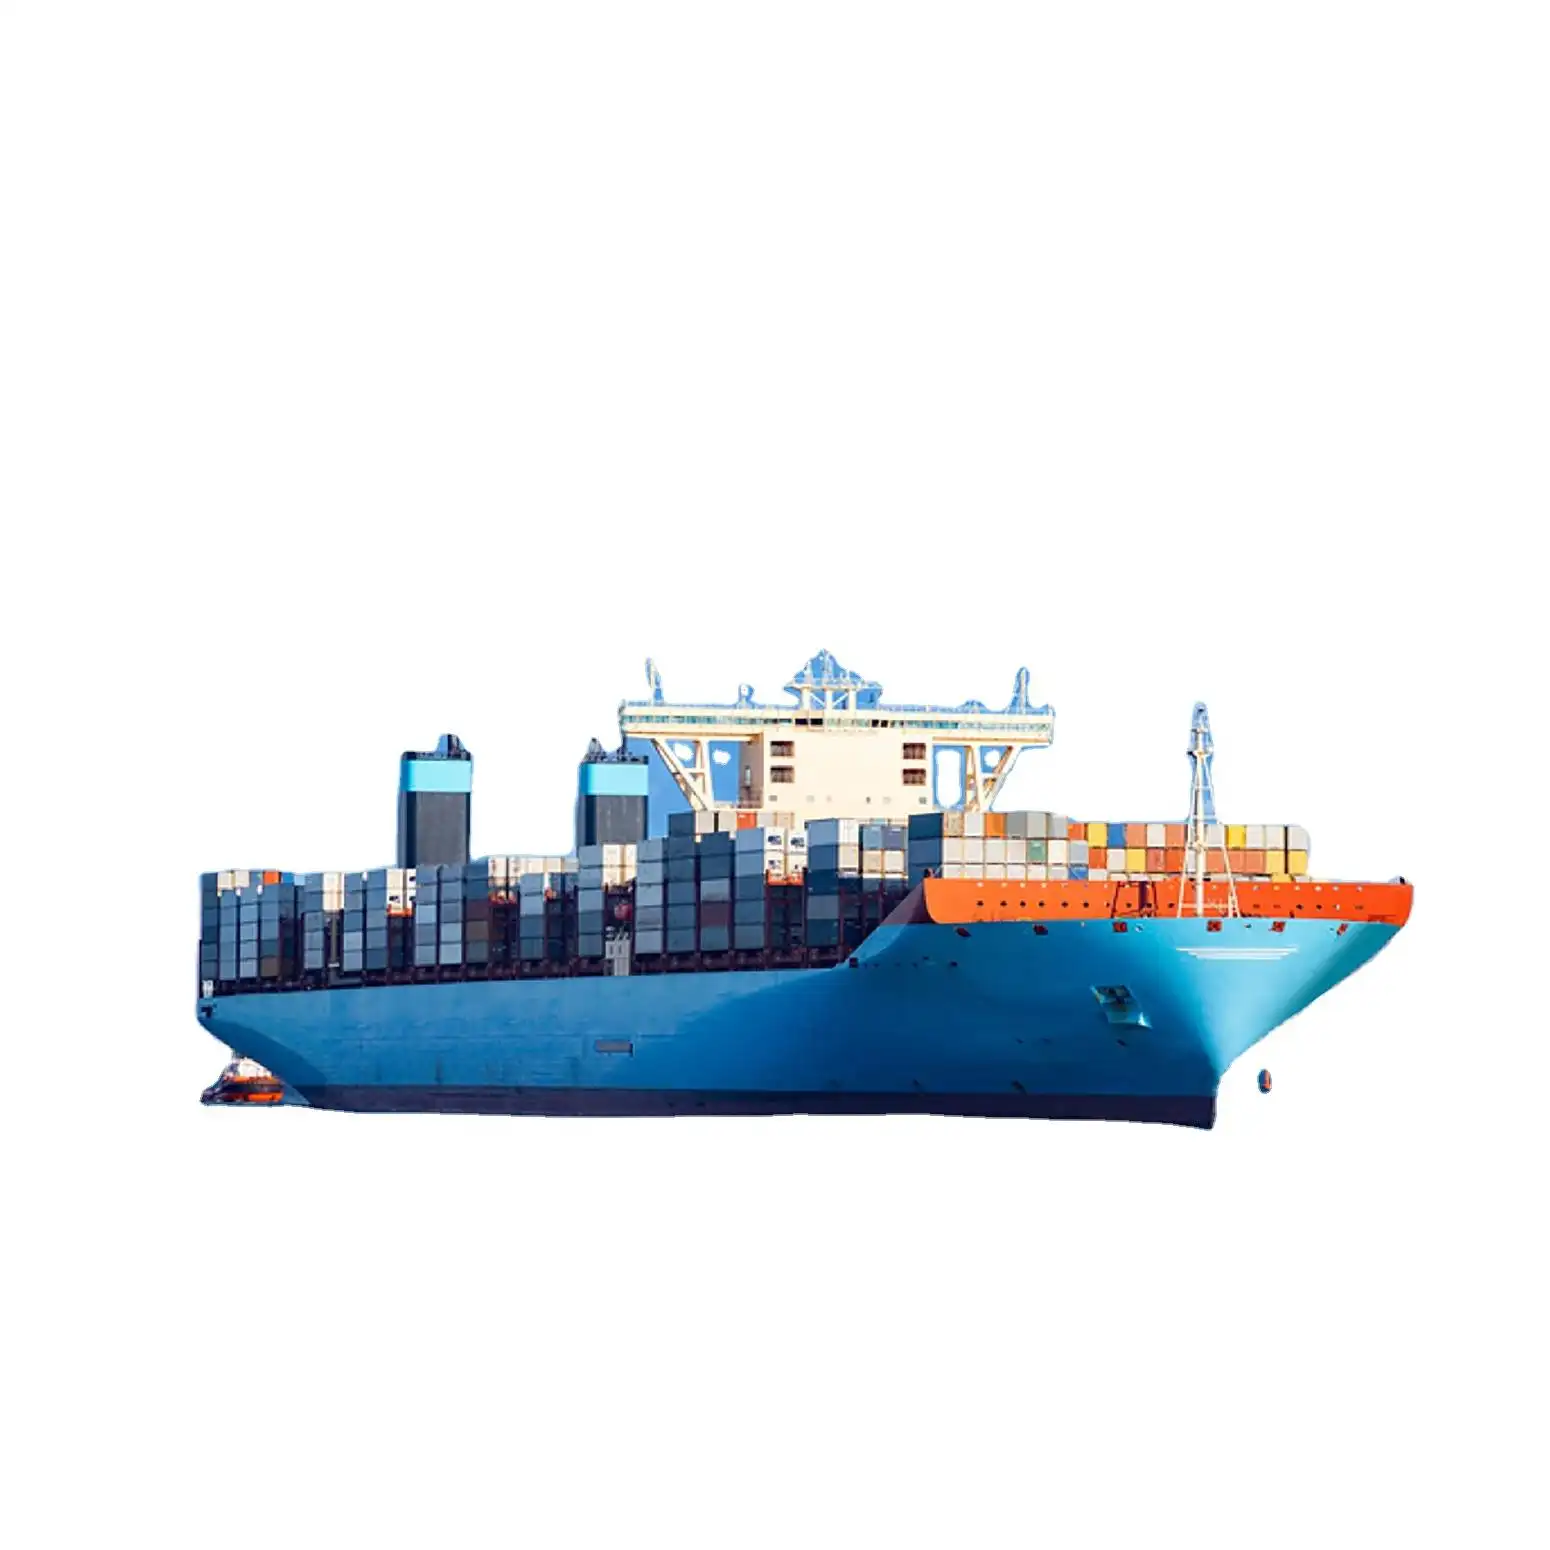 Bester Agent Drop Shipping E-Commerce-Unternehmen Express versand Transport von China nach Indien Inspection Custom Clearing